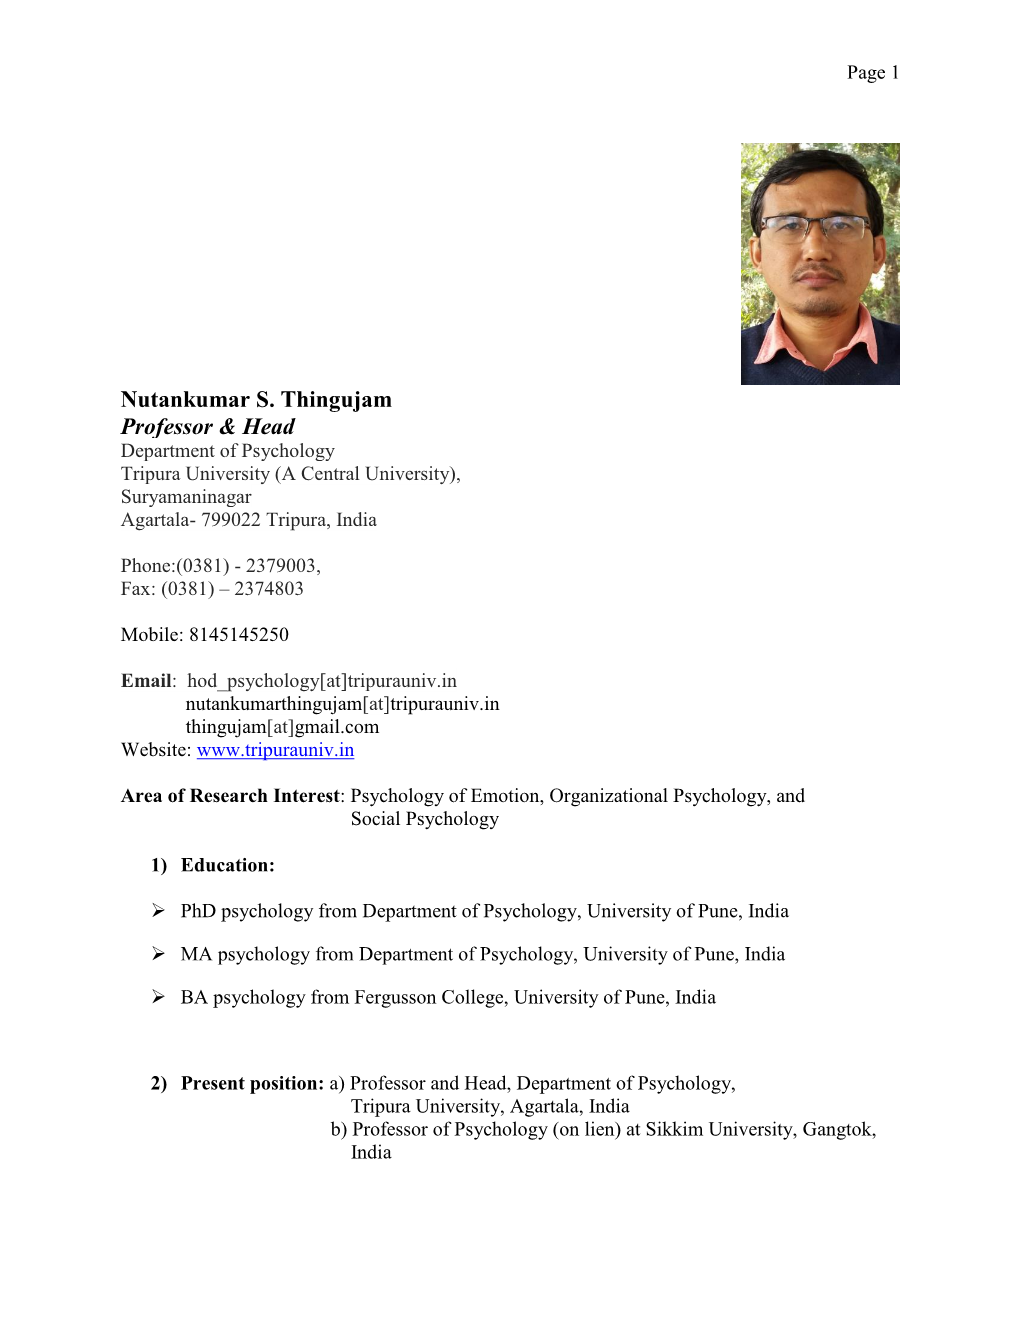 Nutankumar S. Thingujam Professor & Head